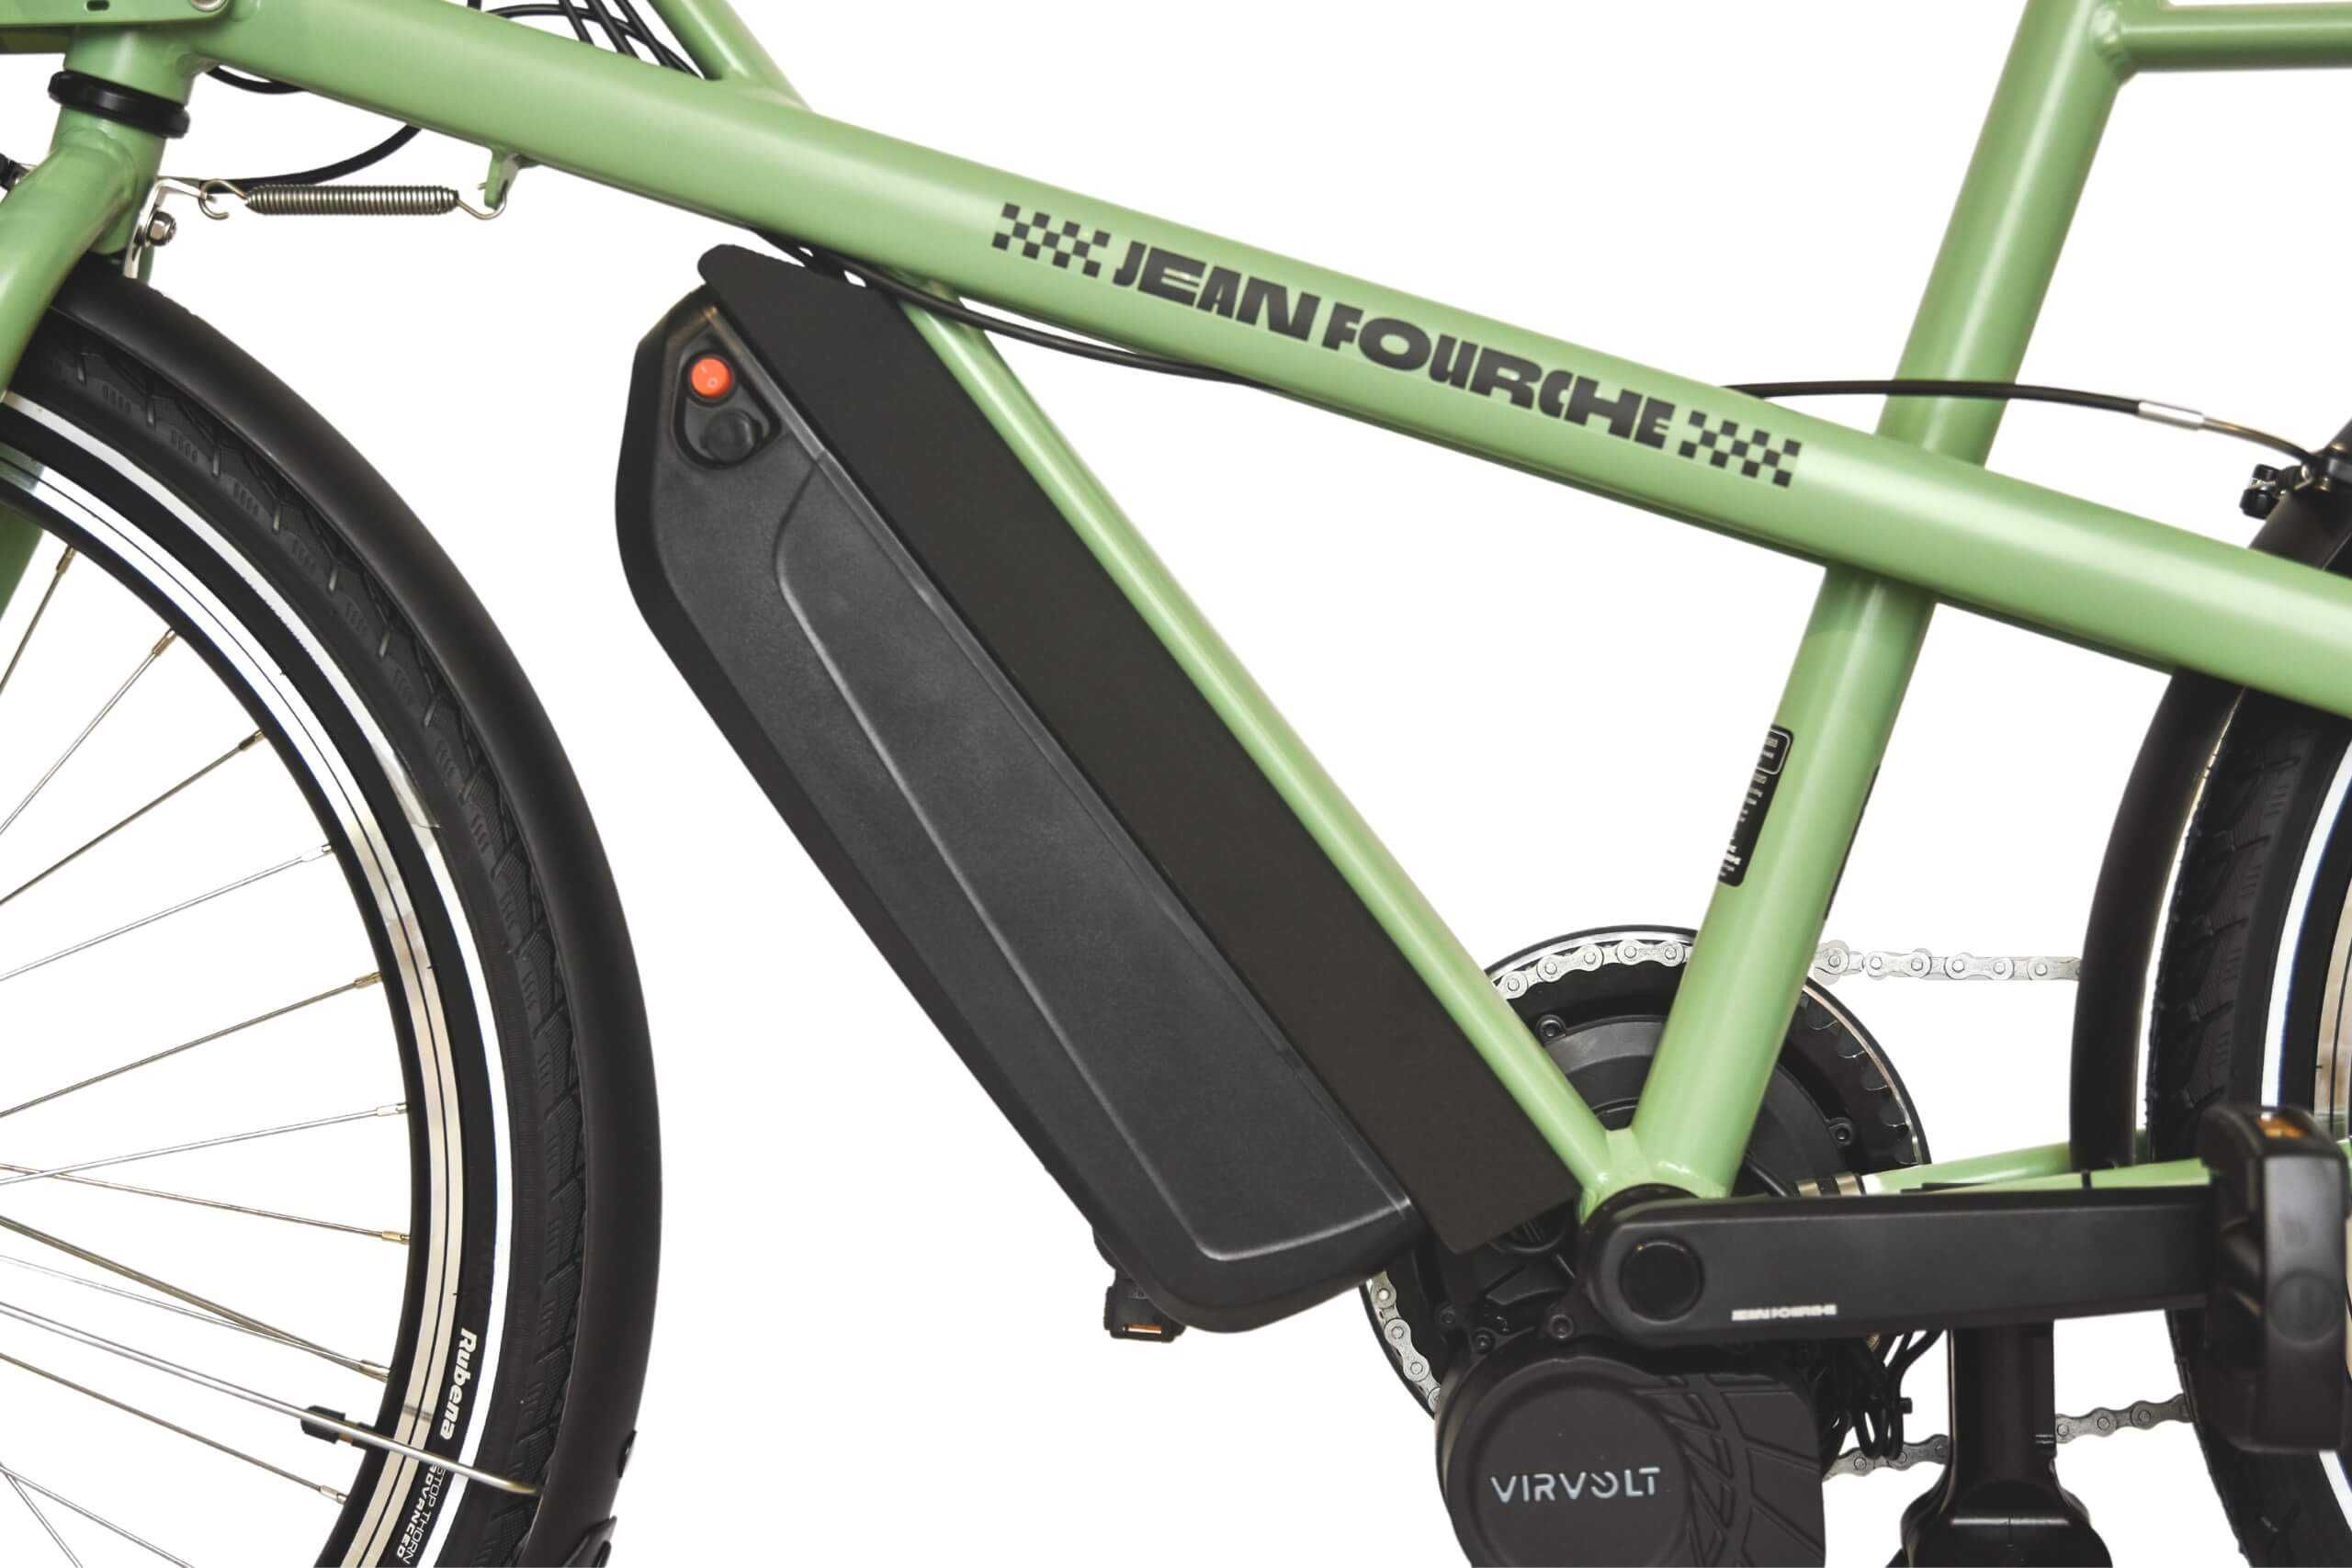 Bicicleta elétrica de carga compacta citadina, Jean Fourche, roda 24"